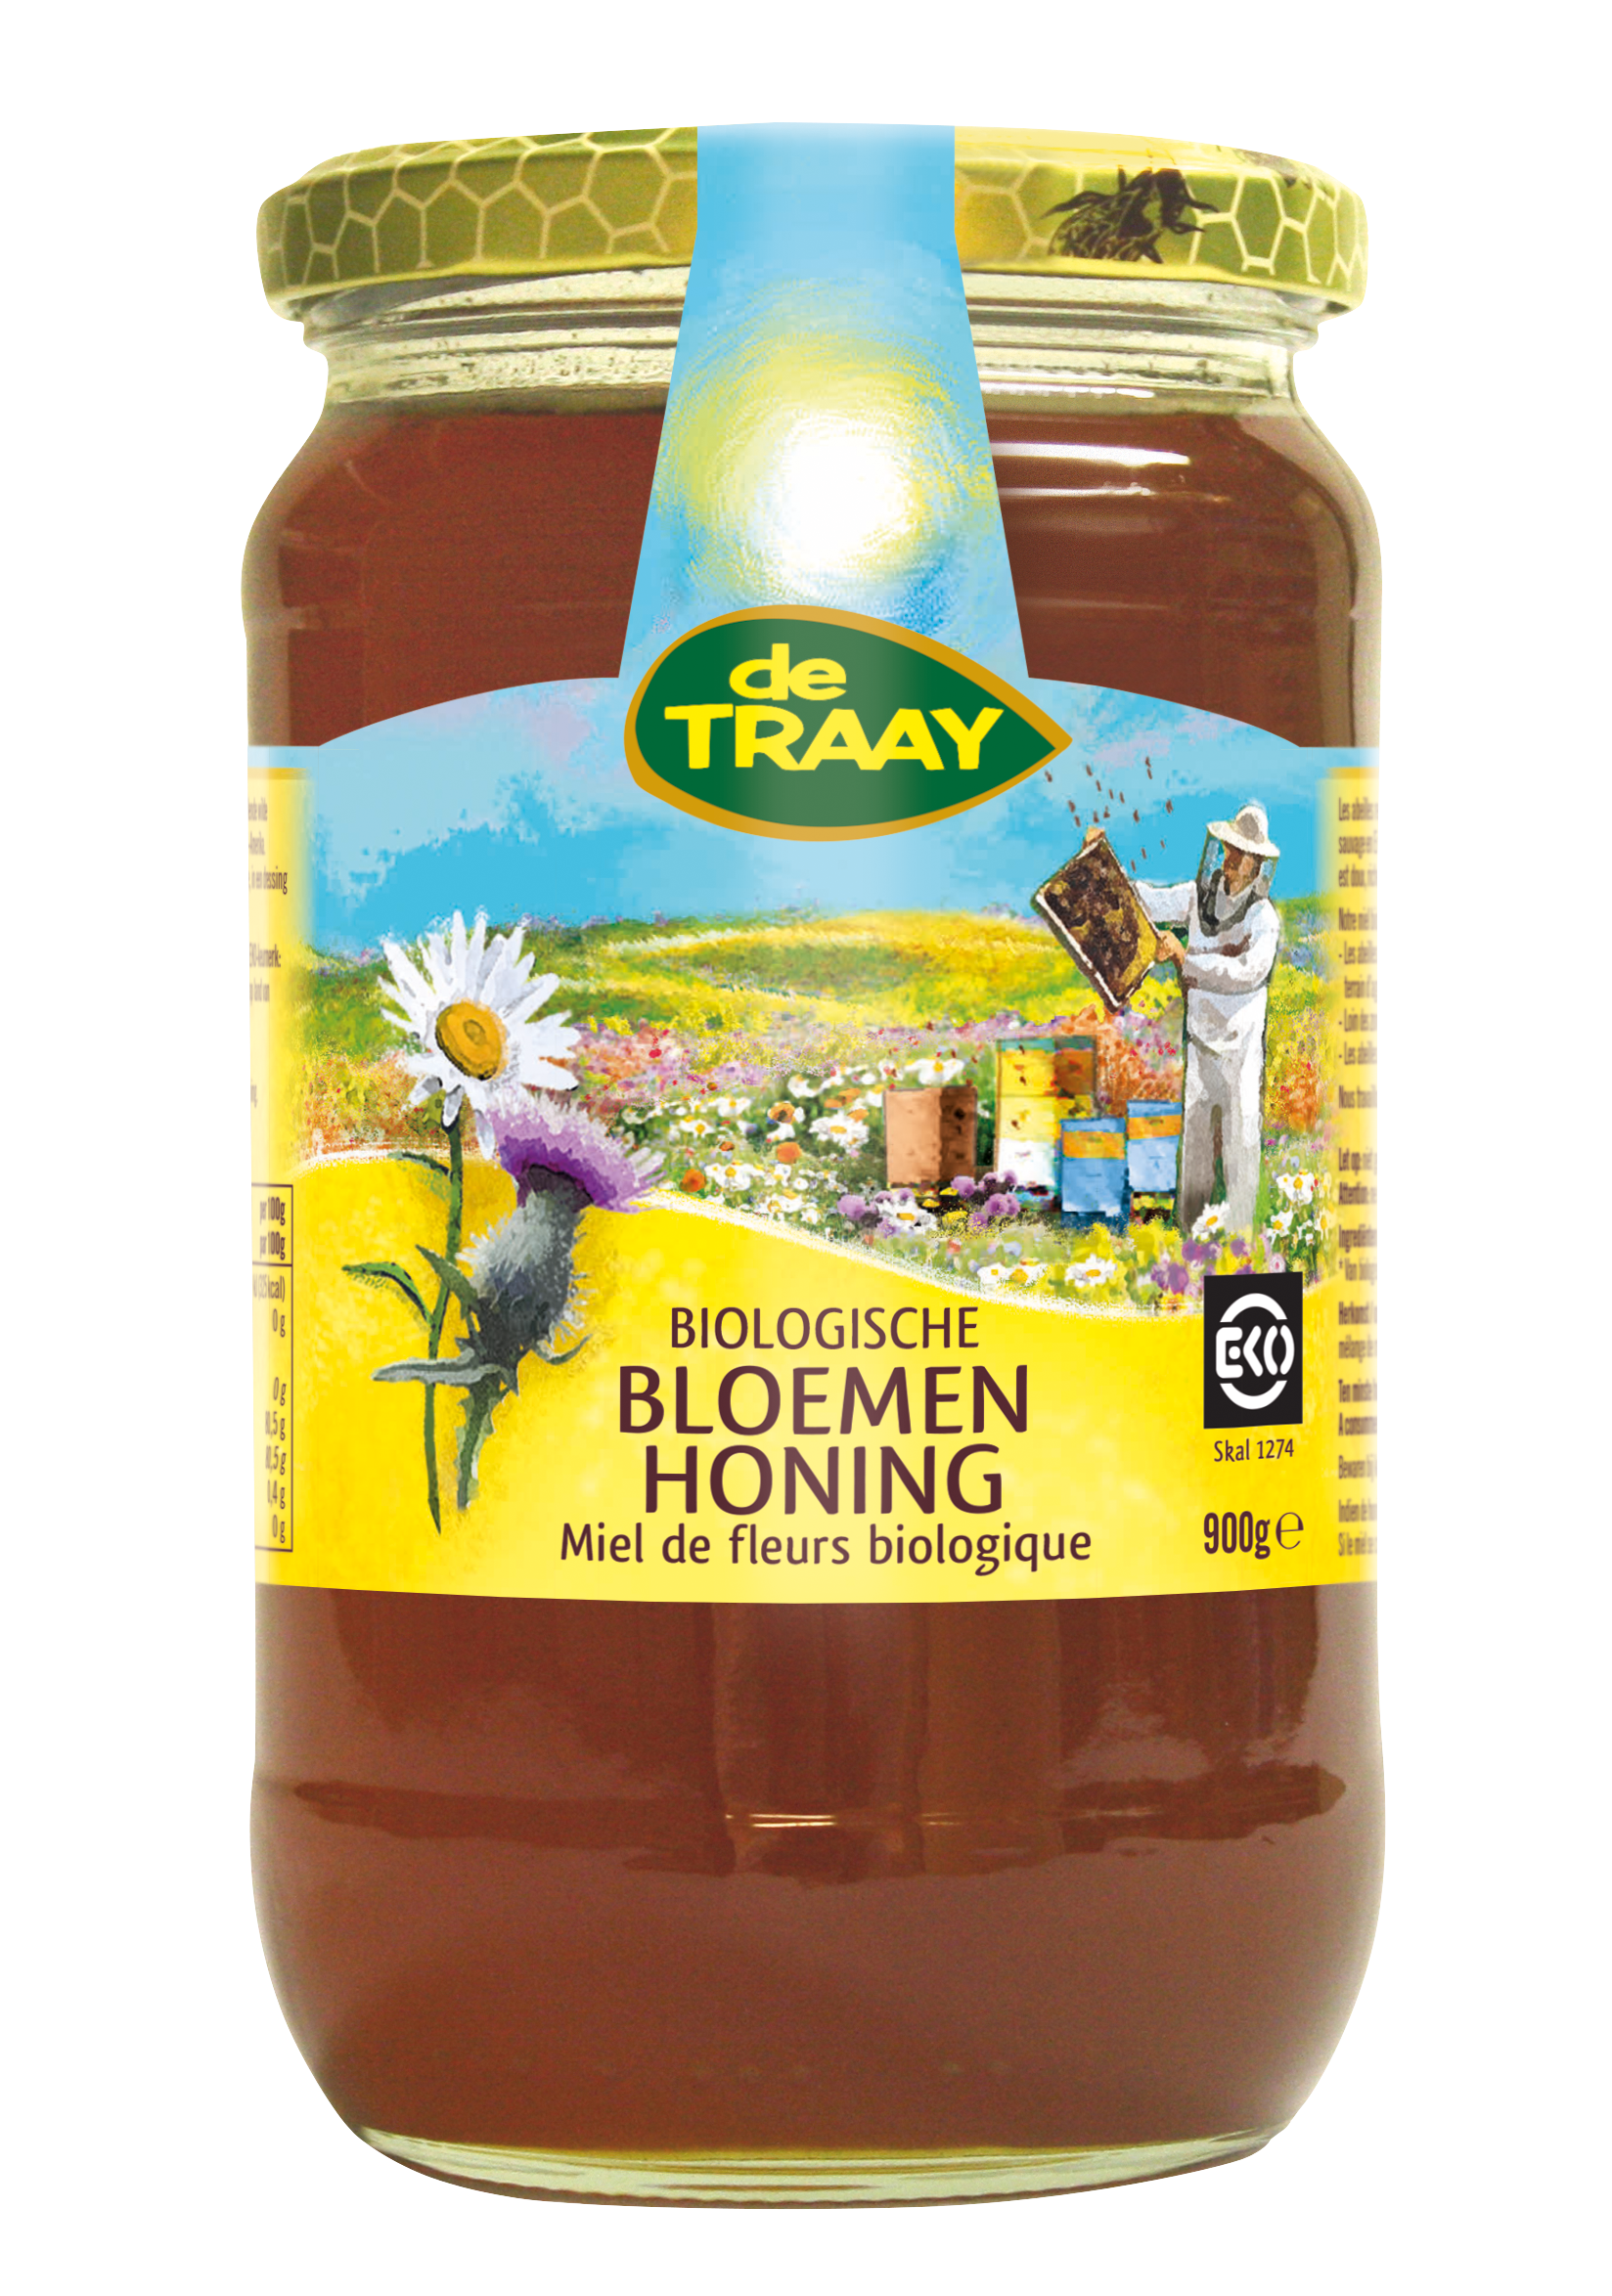 De Traay Miel toutes fleurs liquide bio 900g